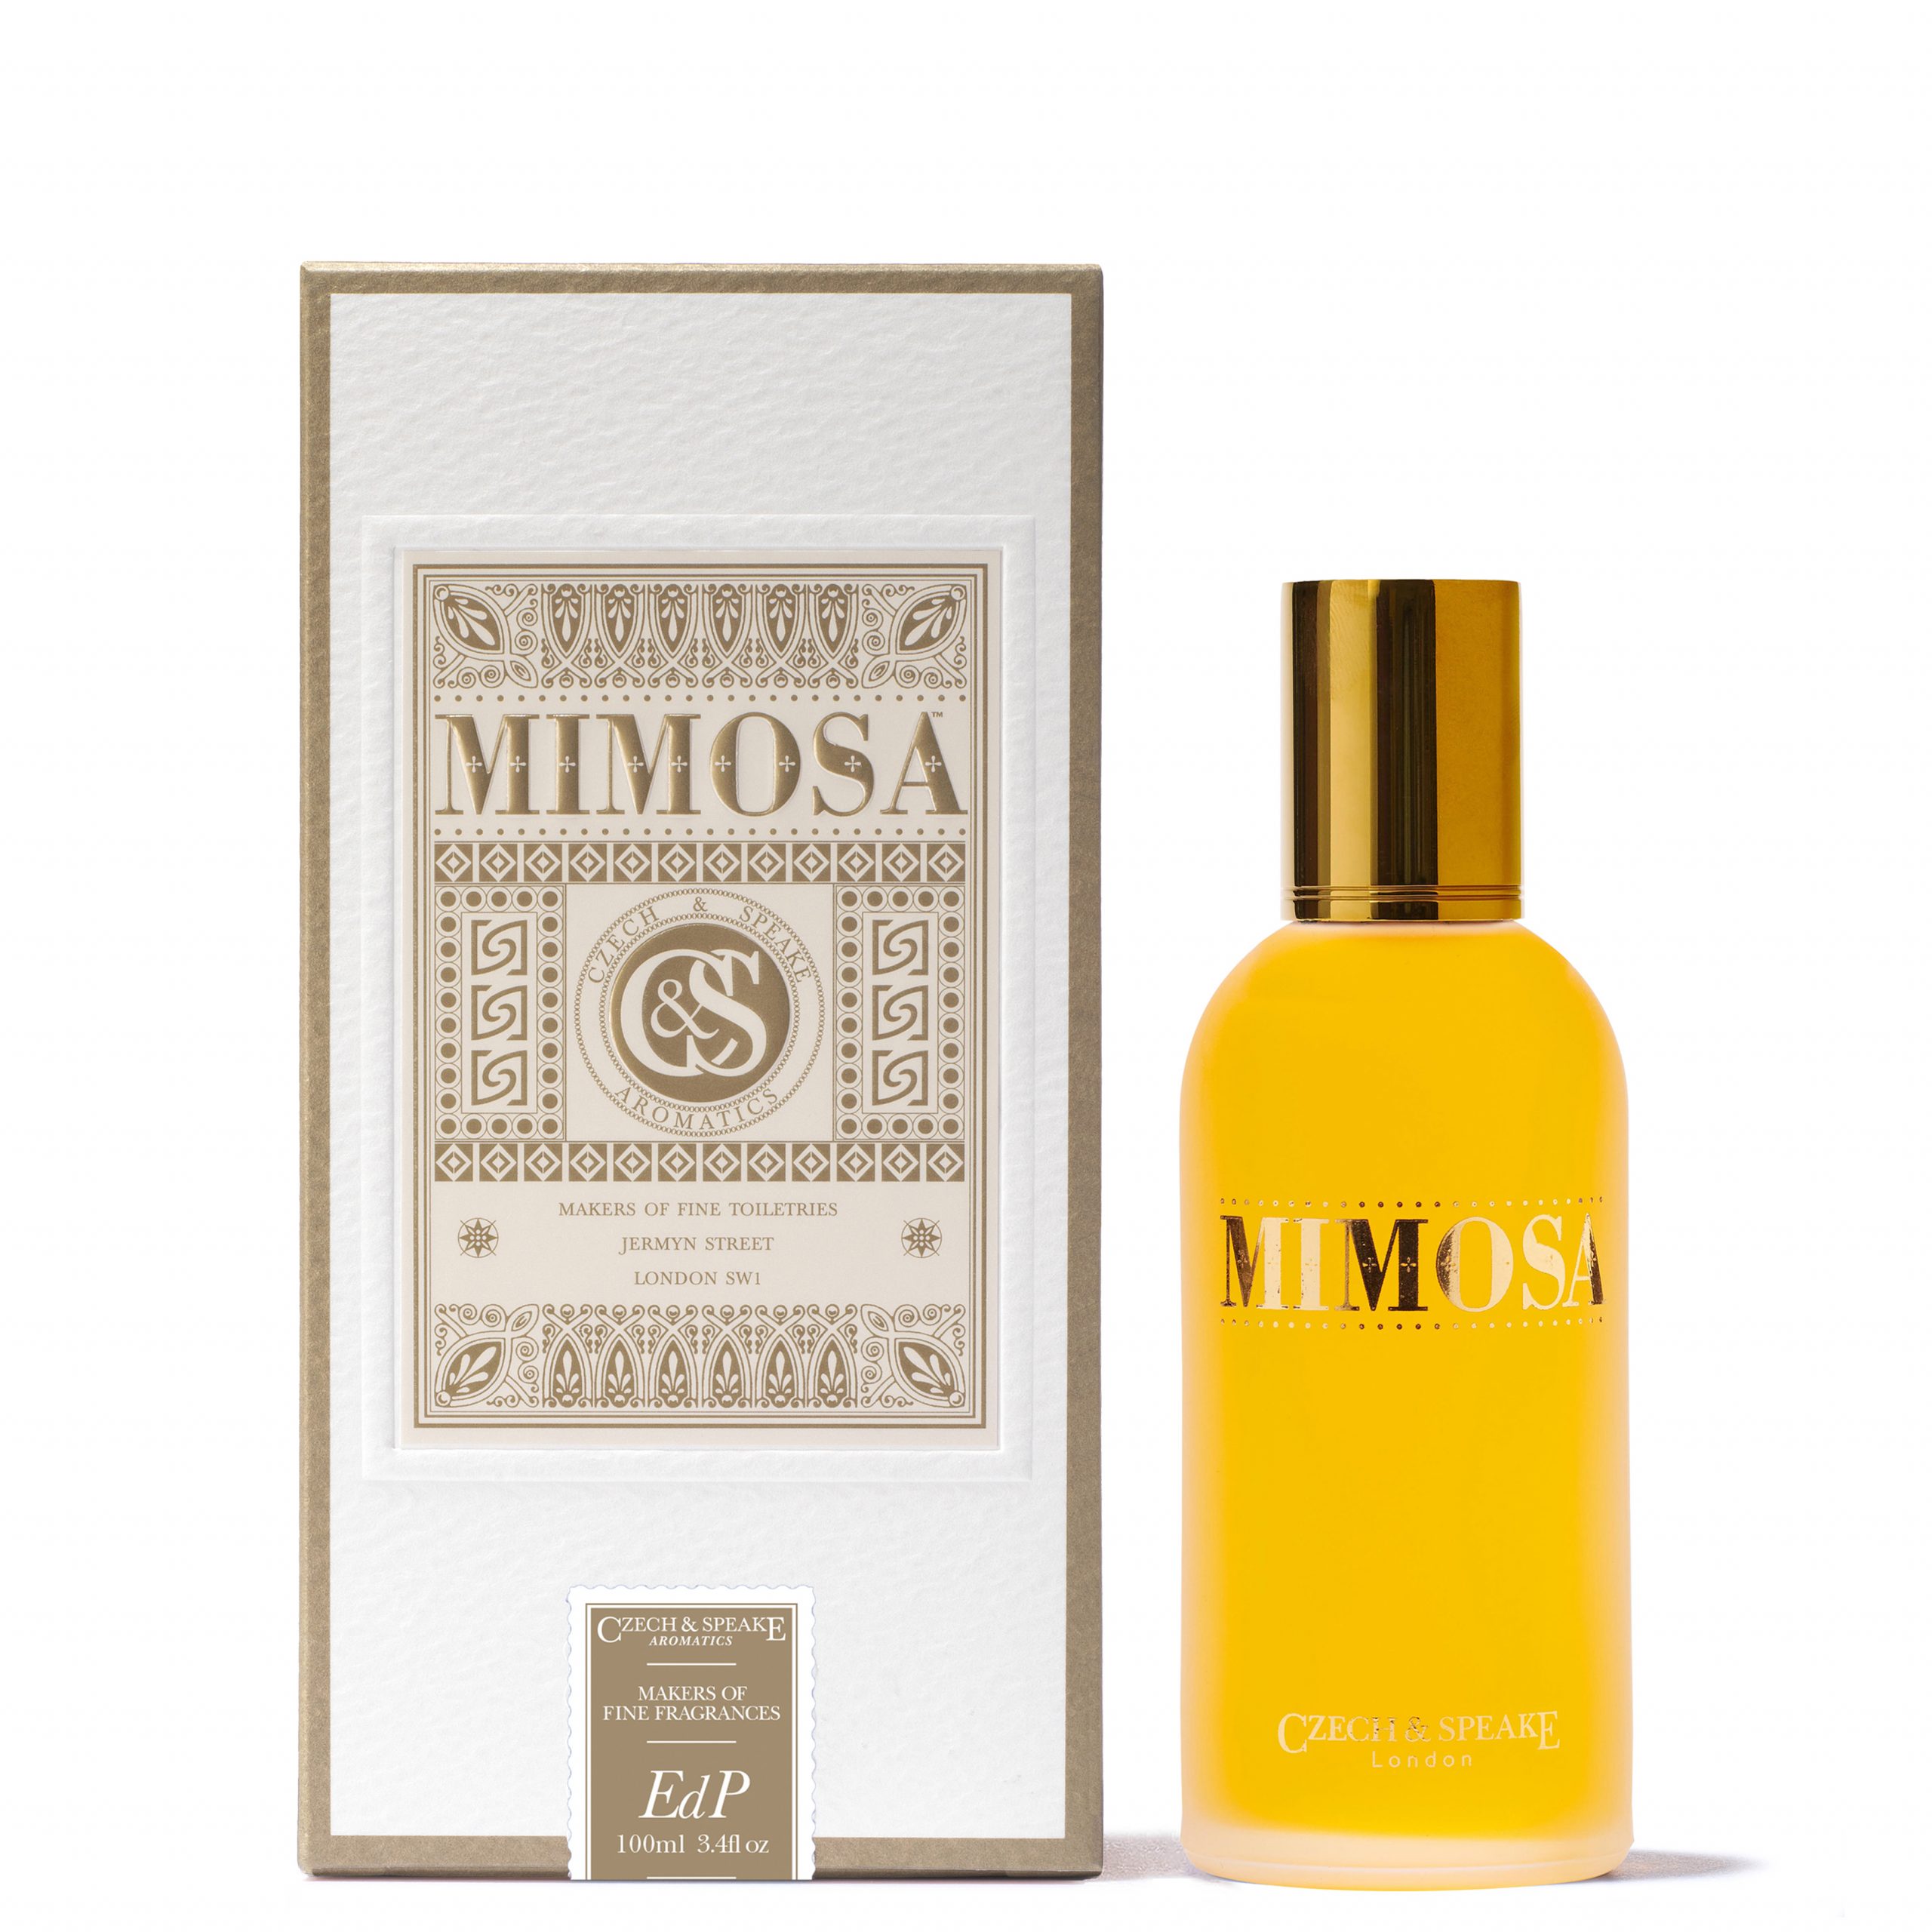 Frankincense & Myrrh Eau de Parfum 2ml Sample - Czech & Speake Fragrance USA